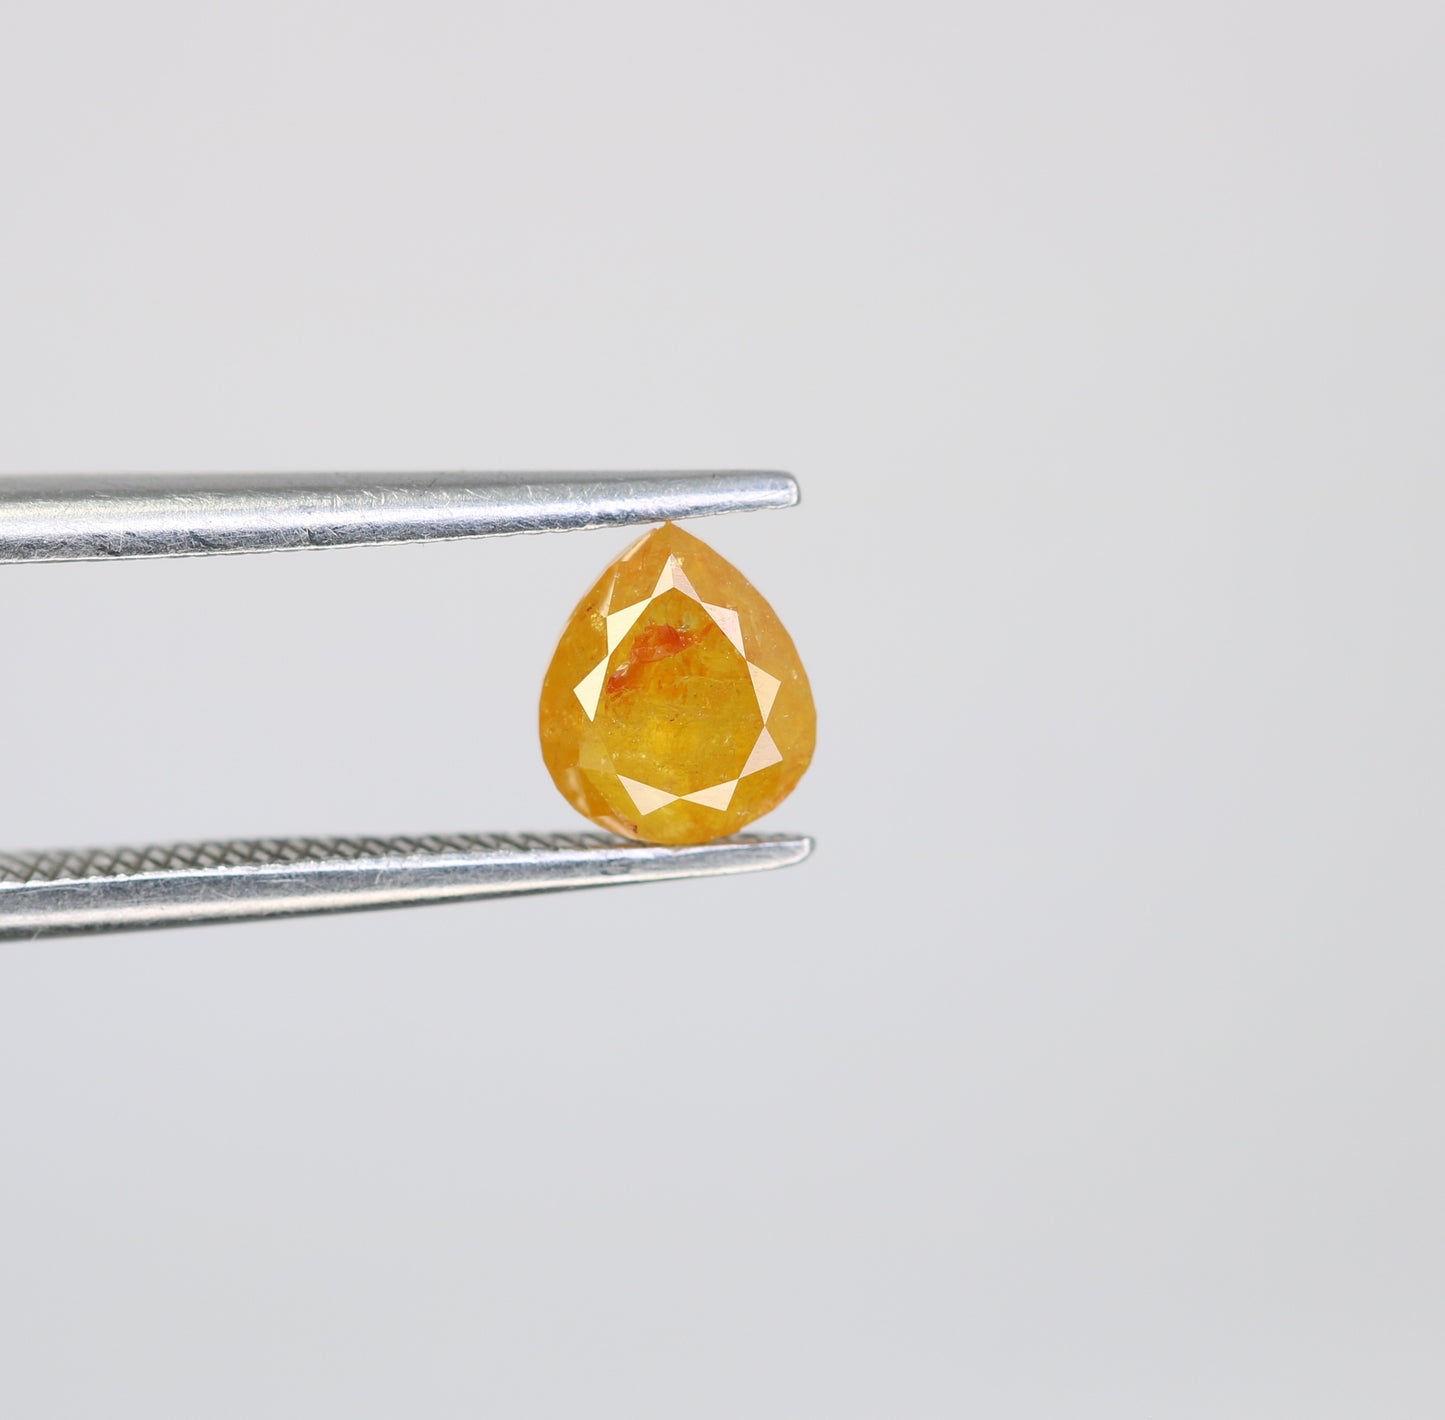 0.85 CT Orange Pear Shape Diamond For Engagement Ring